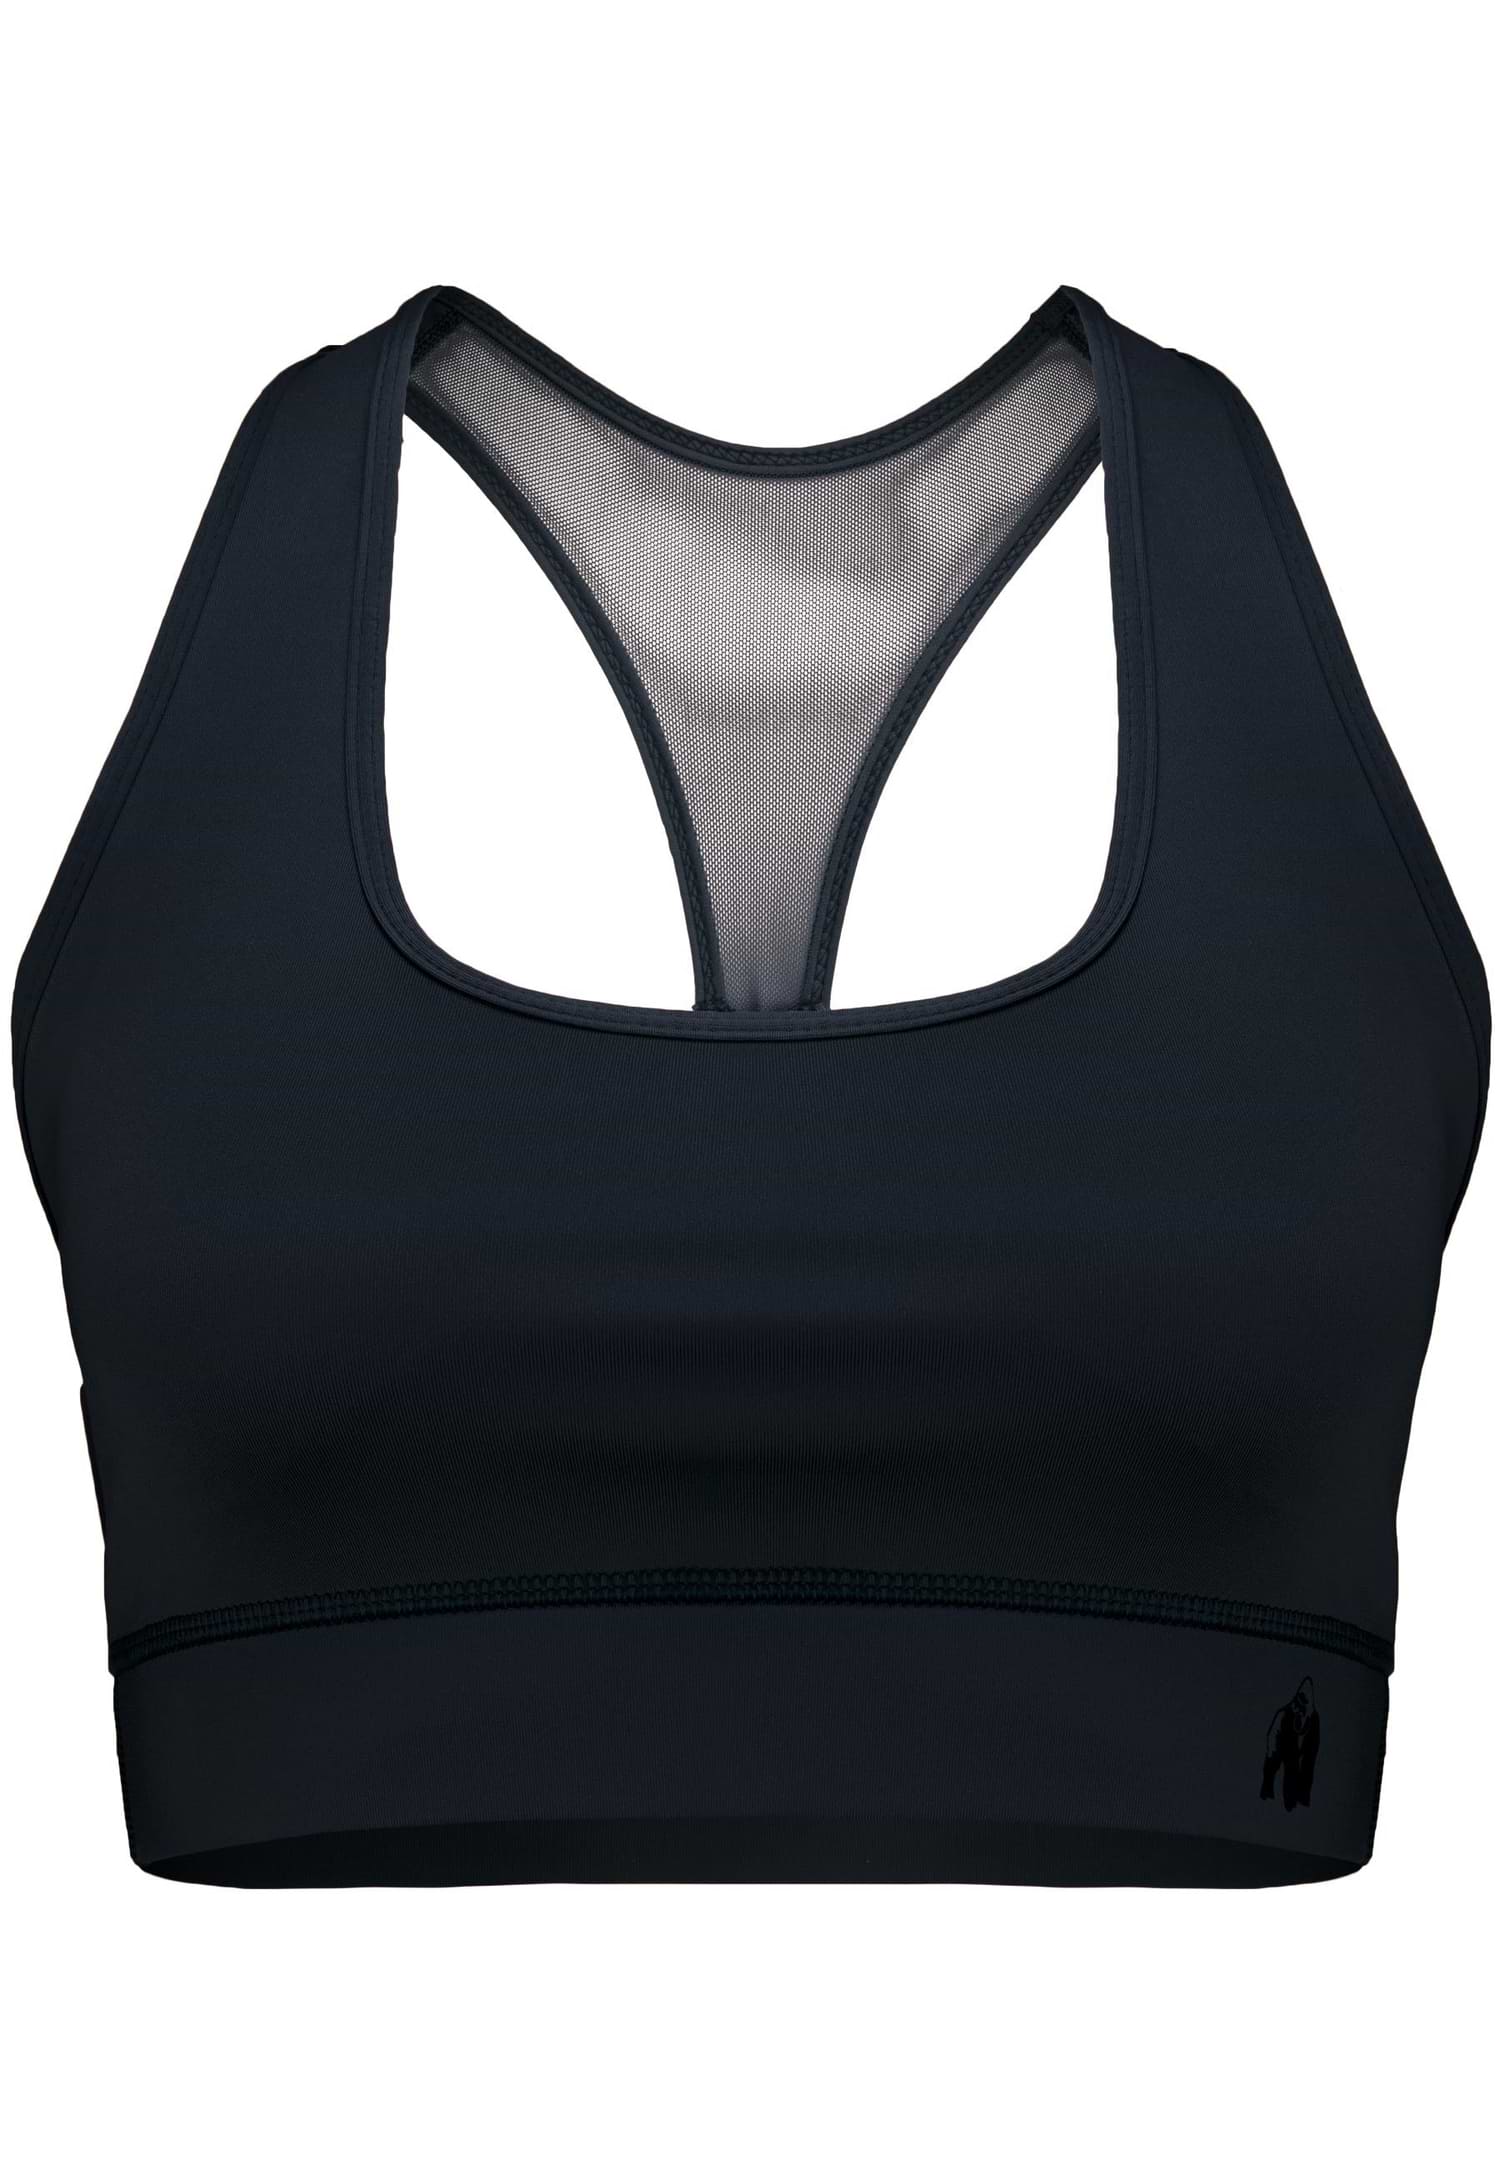 NWT women's MTA sport sports bra size L color black and gray in